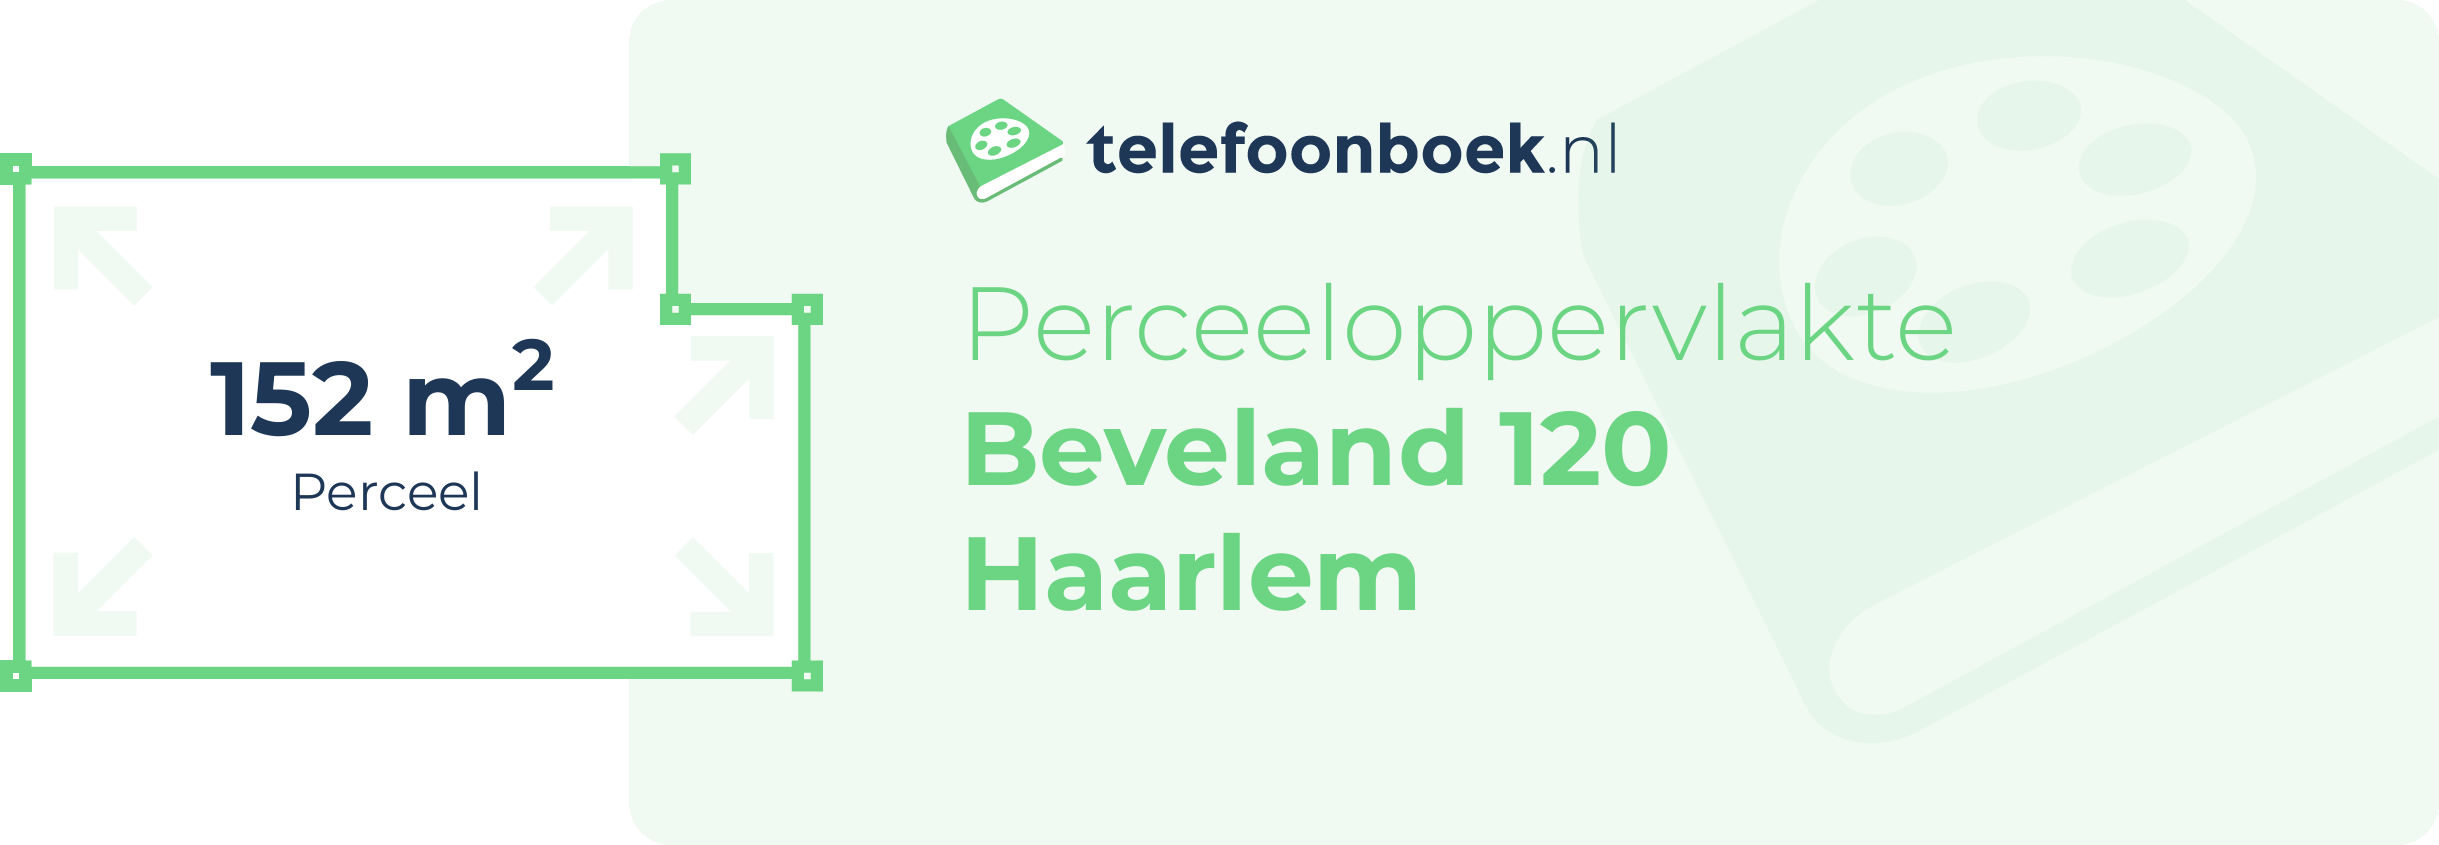 Perceeloppervlakte Beveland 120 Haarlem